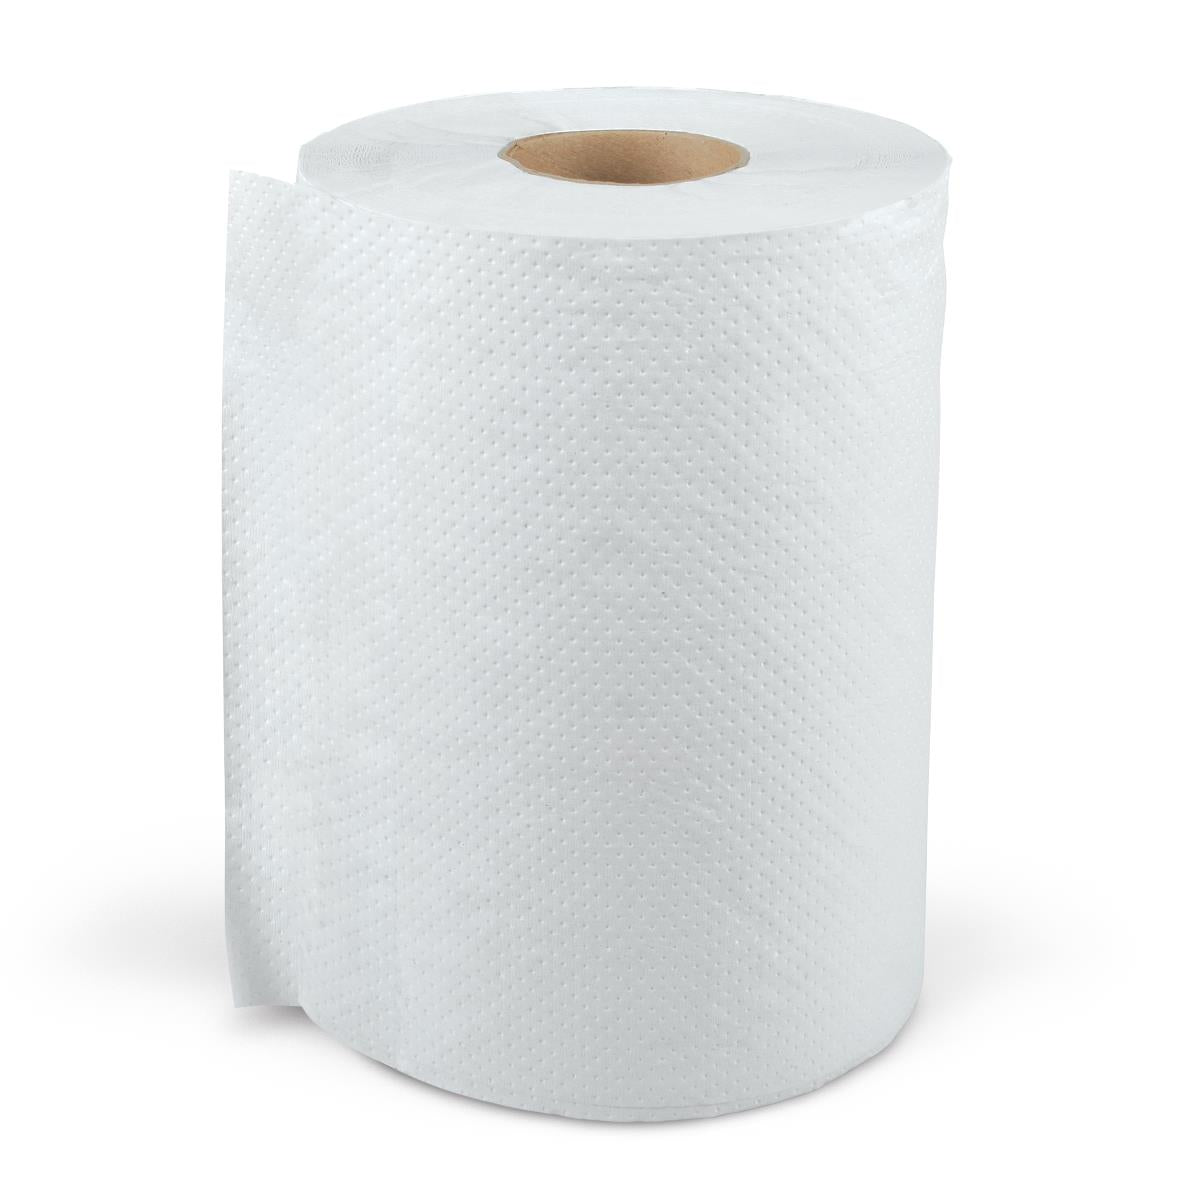 Medline 8" x 350' Standard Paper Towel Roll 12/cs NONPBM350